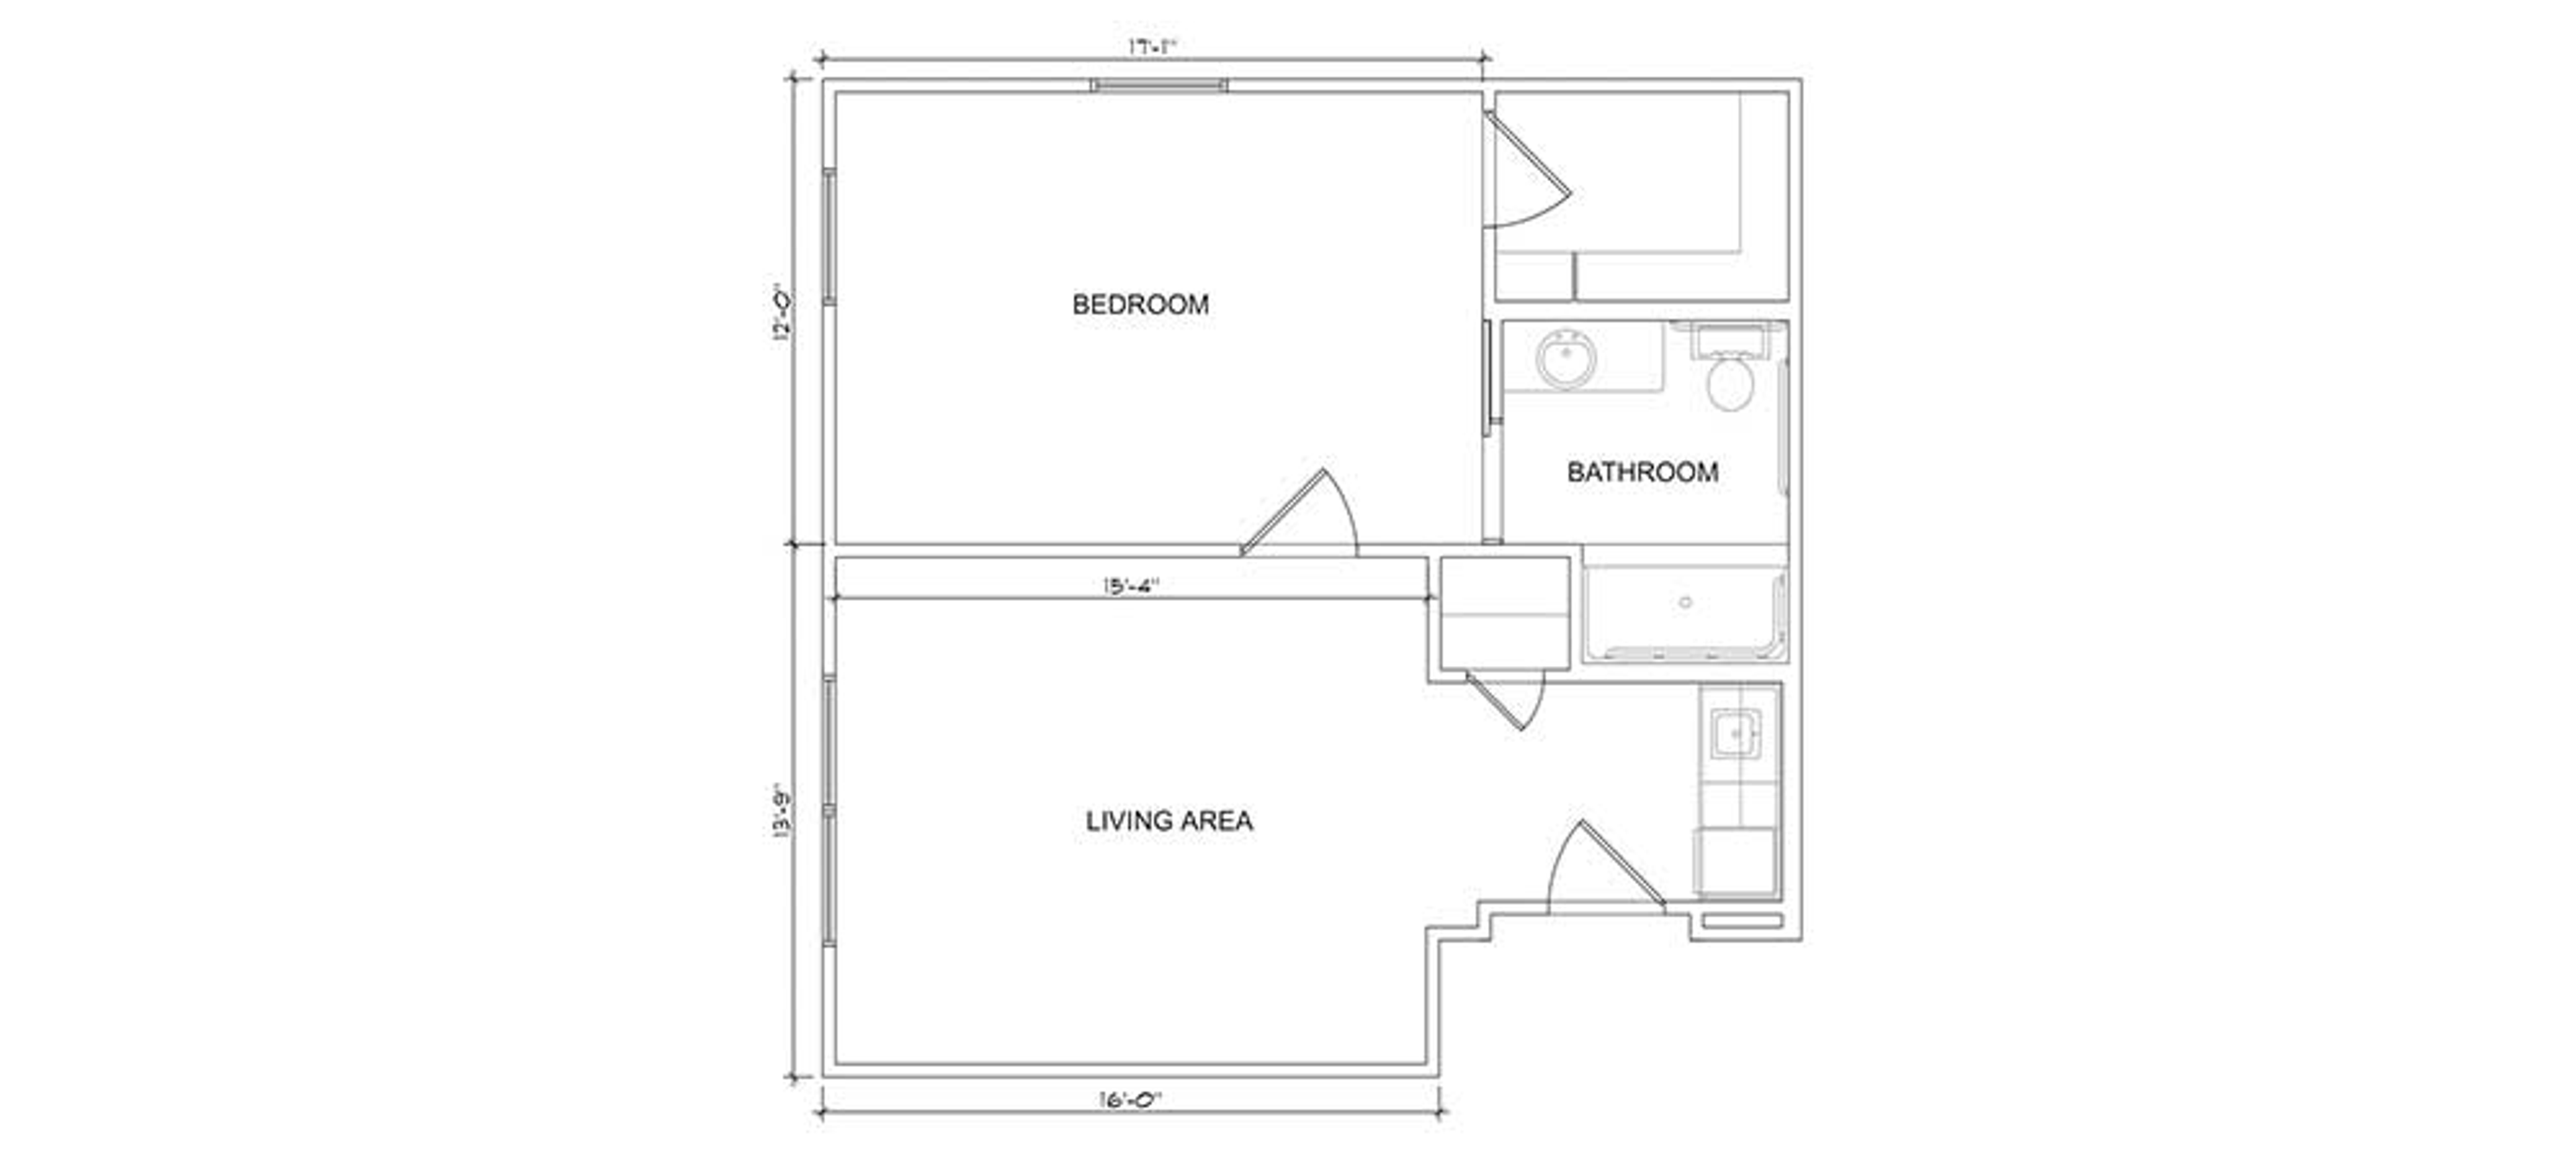 Floorplan - Walnut Creek -1 bed, 1 bath, Standard Assisted Living